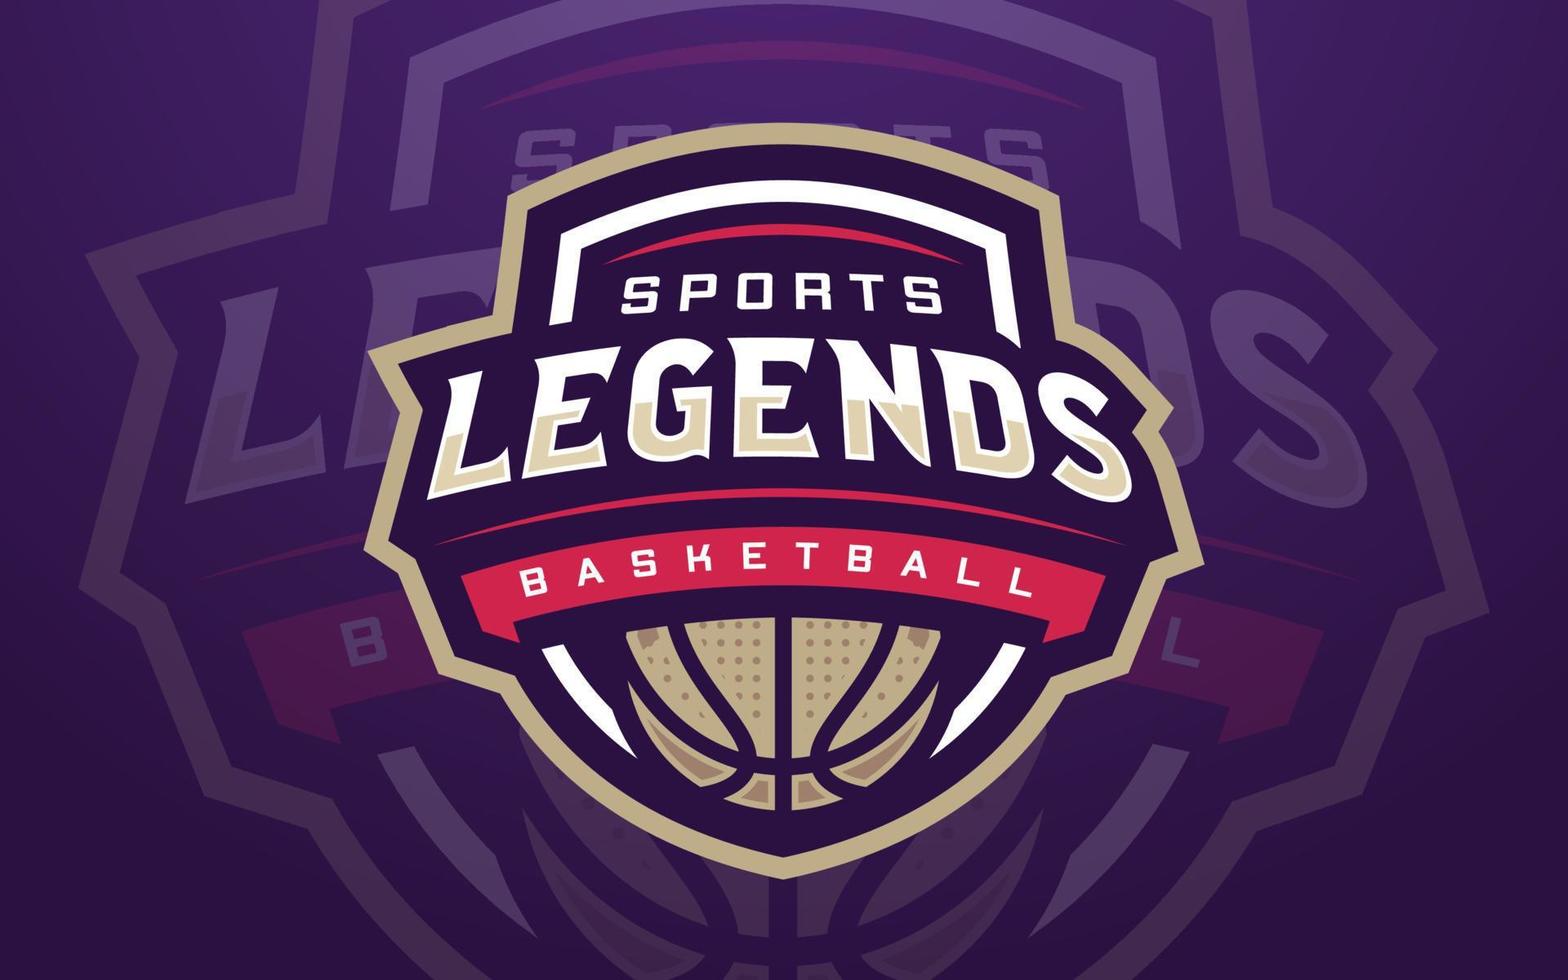 legendes basketbalclub logo sjabloon voor sportteam en toernooi vector